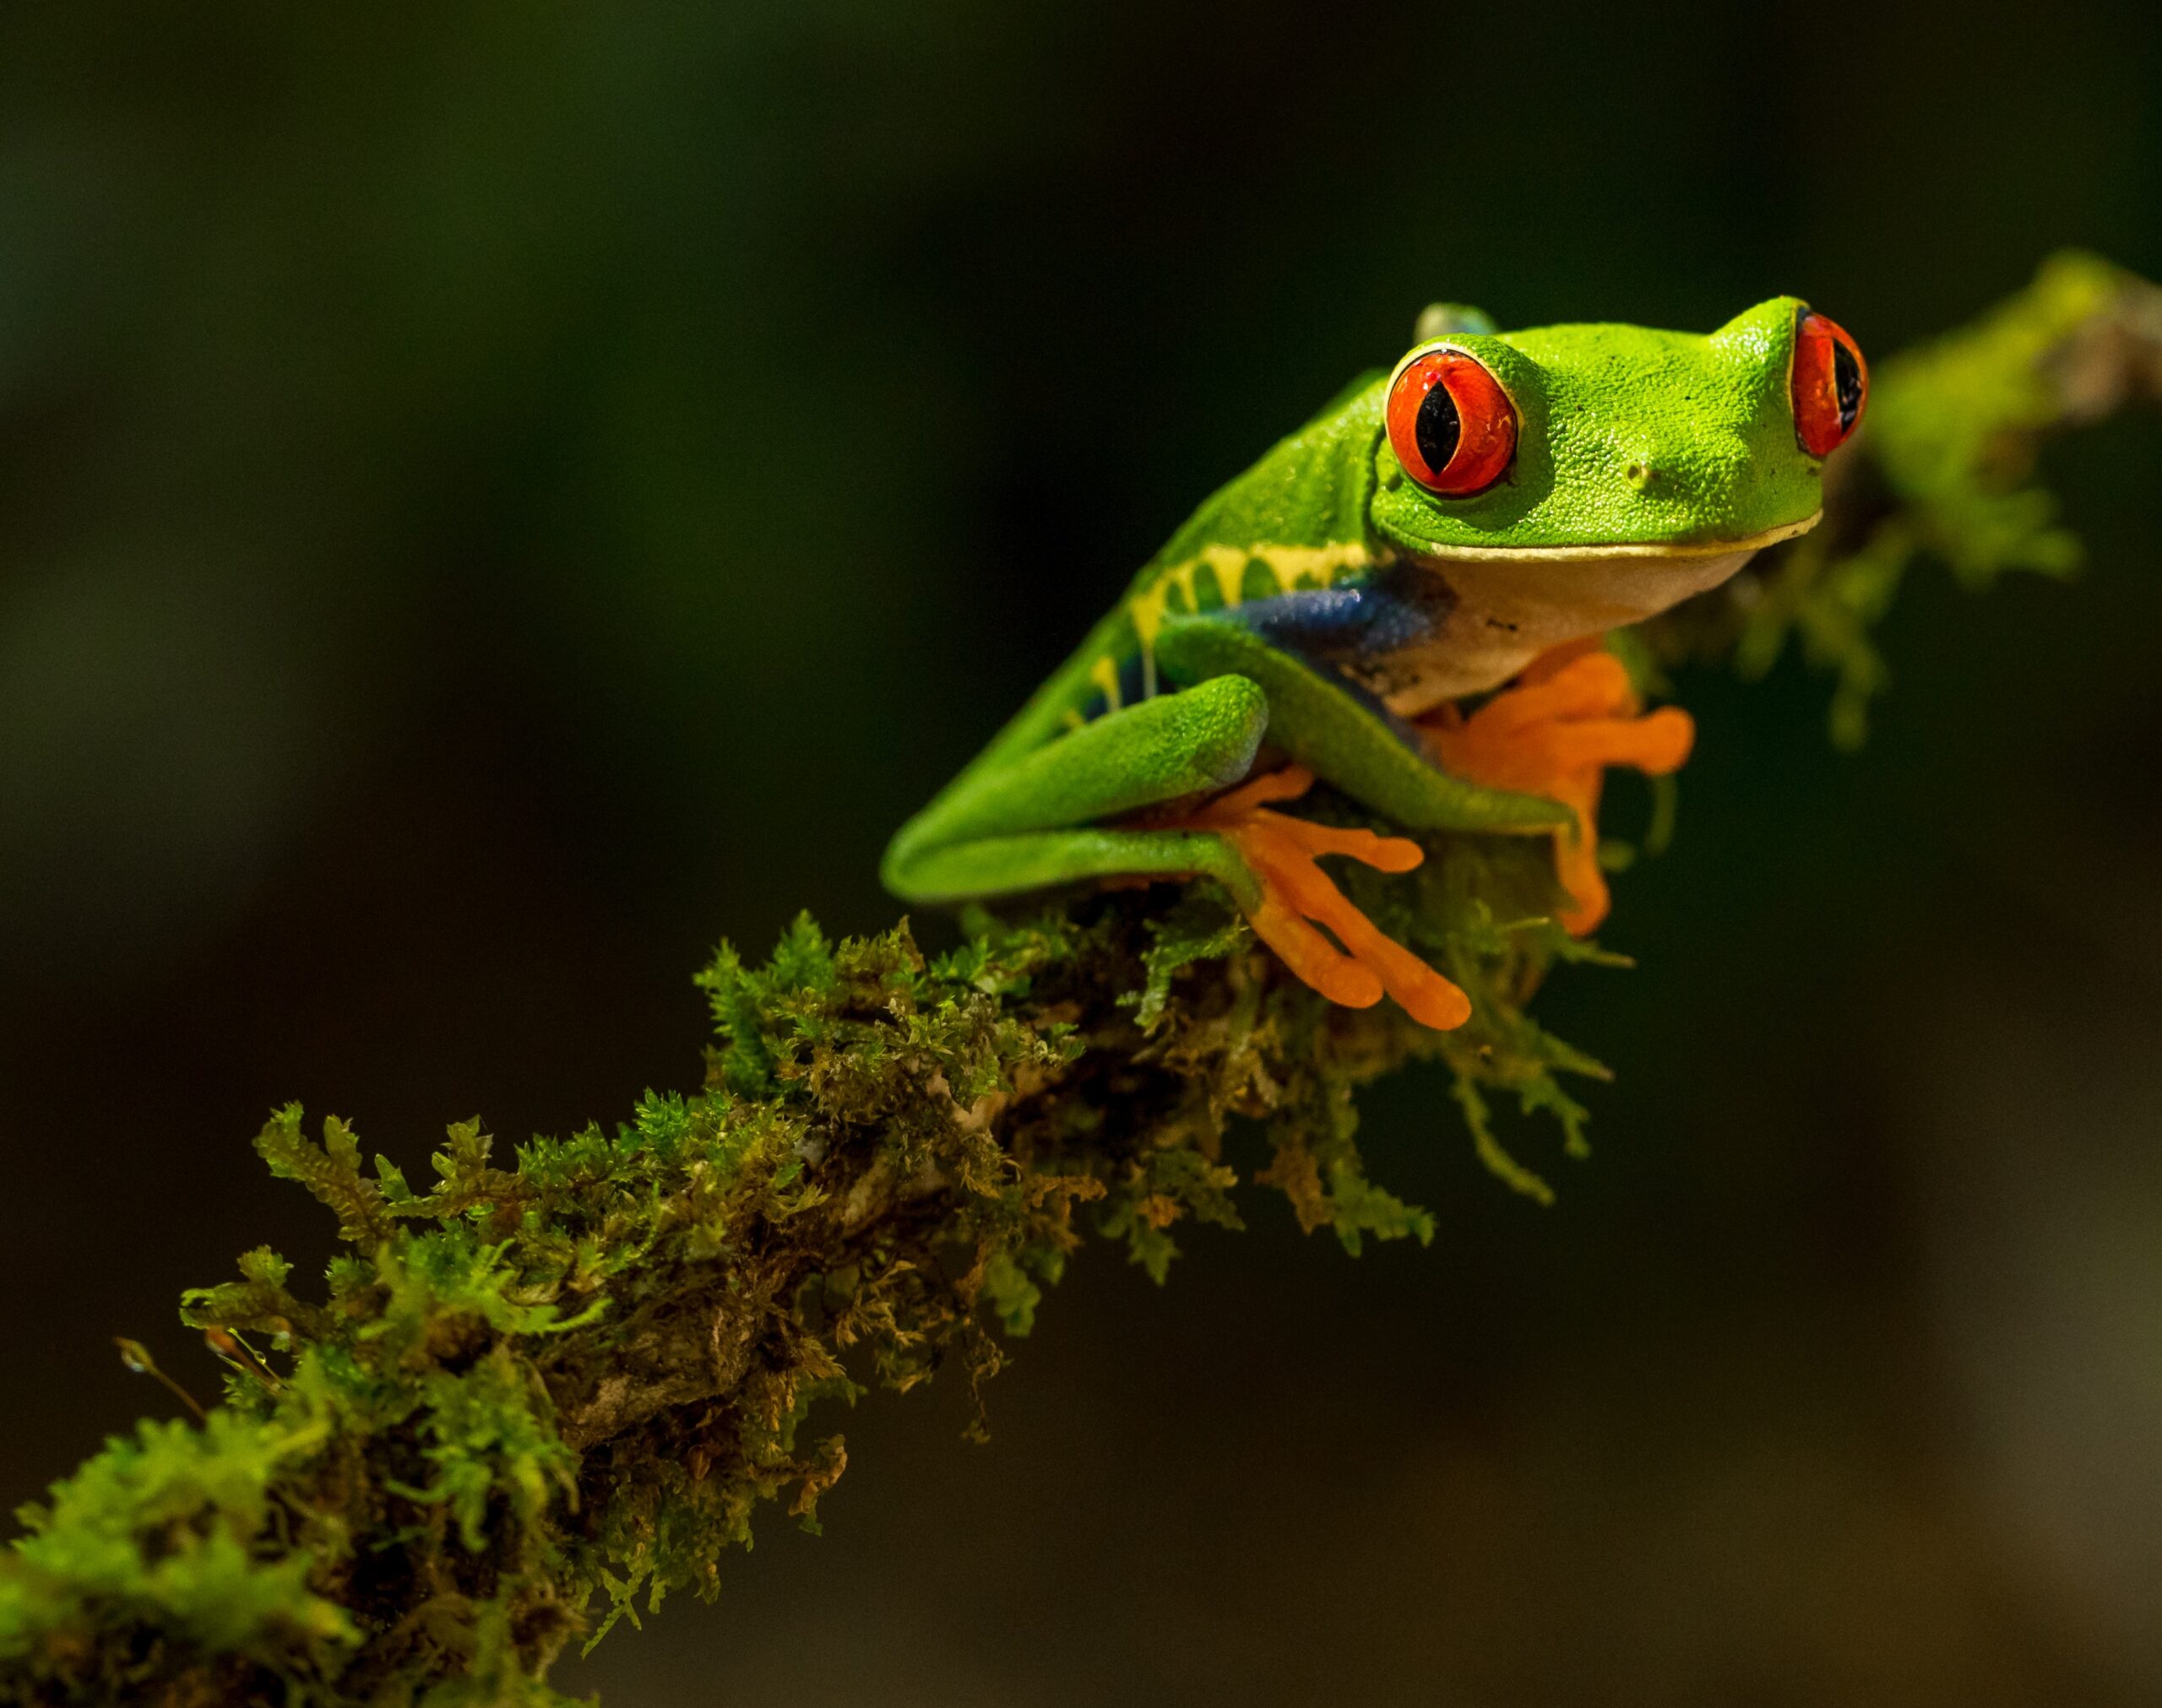 Red-eye tree frog in Costa Rica (Photo Credit:  Zdeněk Macháček on Unsplash)